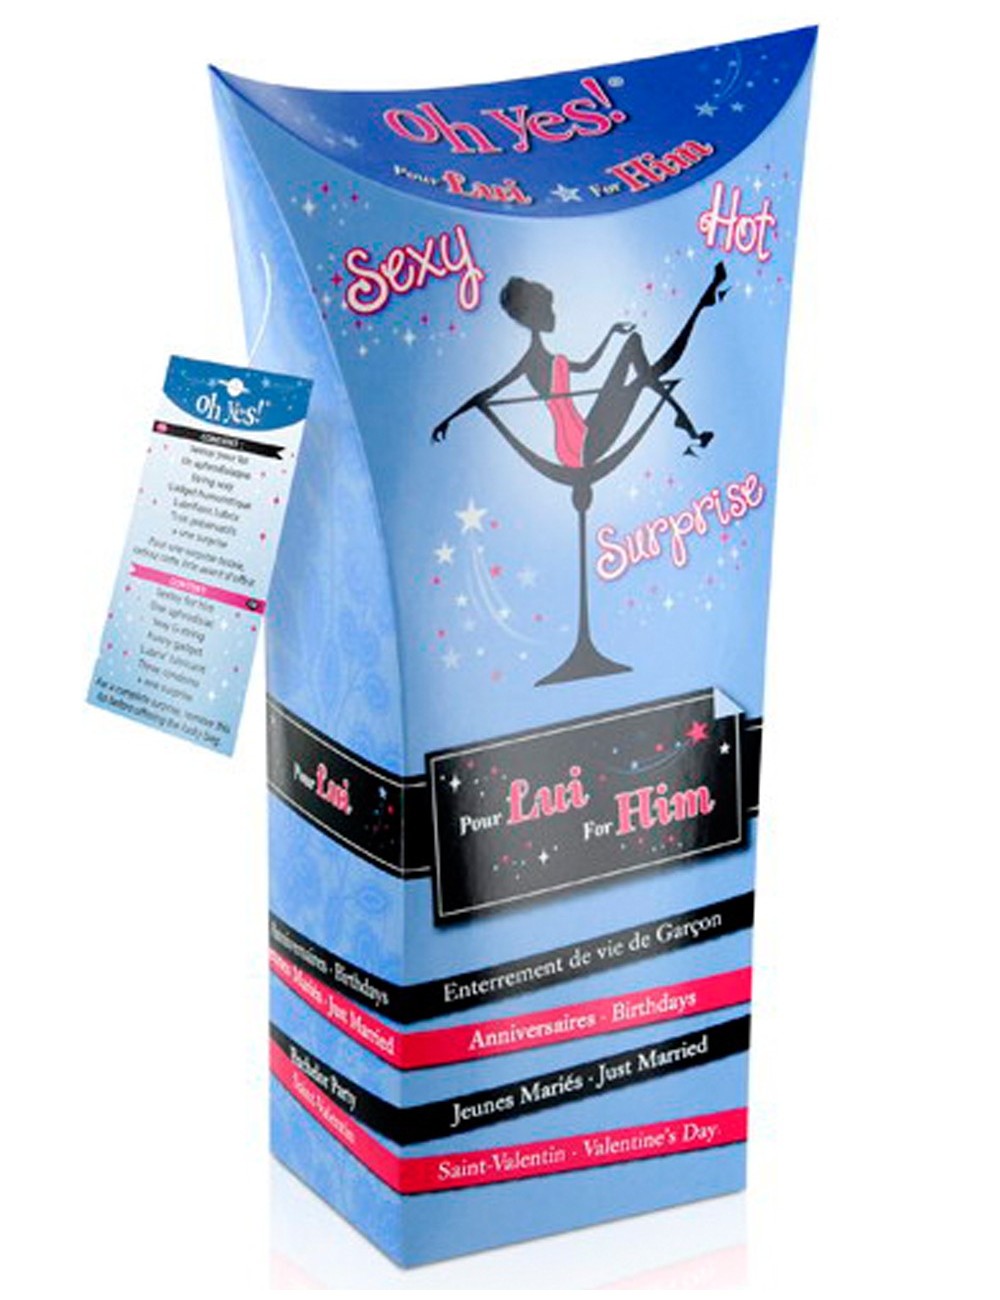 Boîte cadeau sexy homme sextoys string preservatif lubrifiant - CC597198